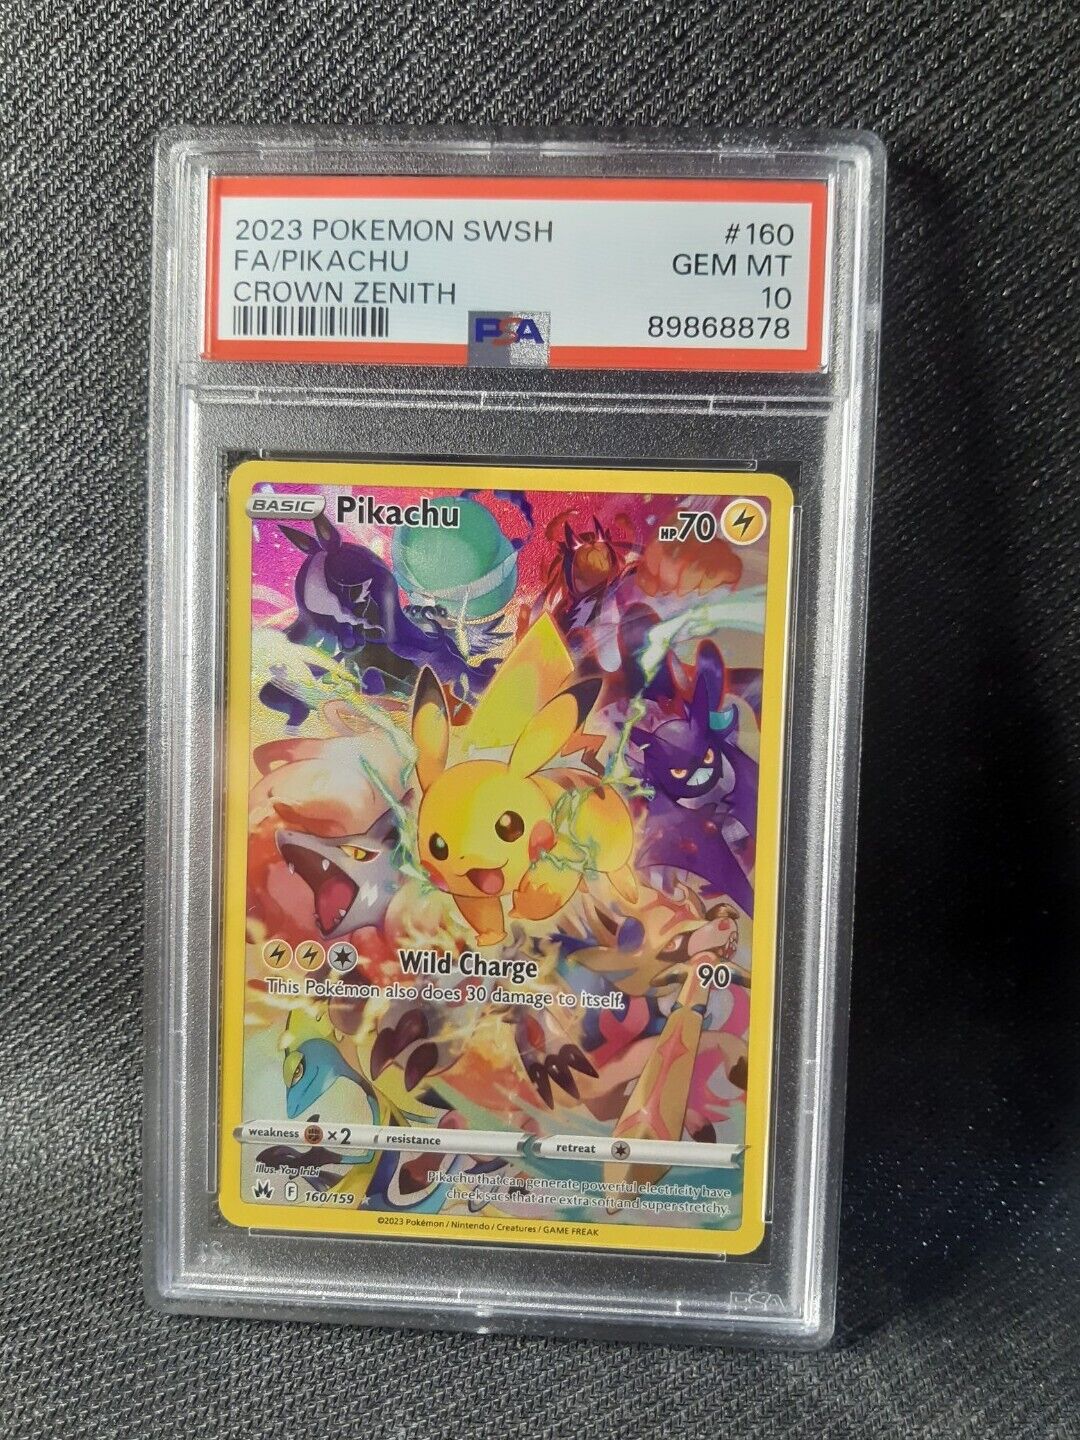 PSA 10 Pikachu 160/159 Crown Zenith Full Art Holo Graded Pokemon Card